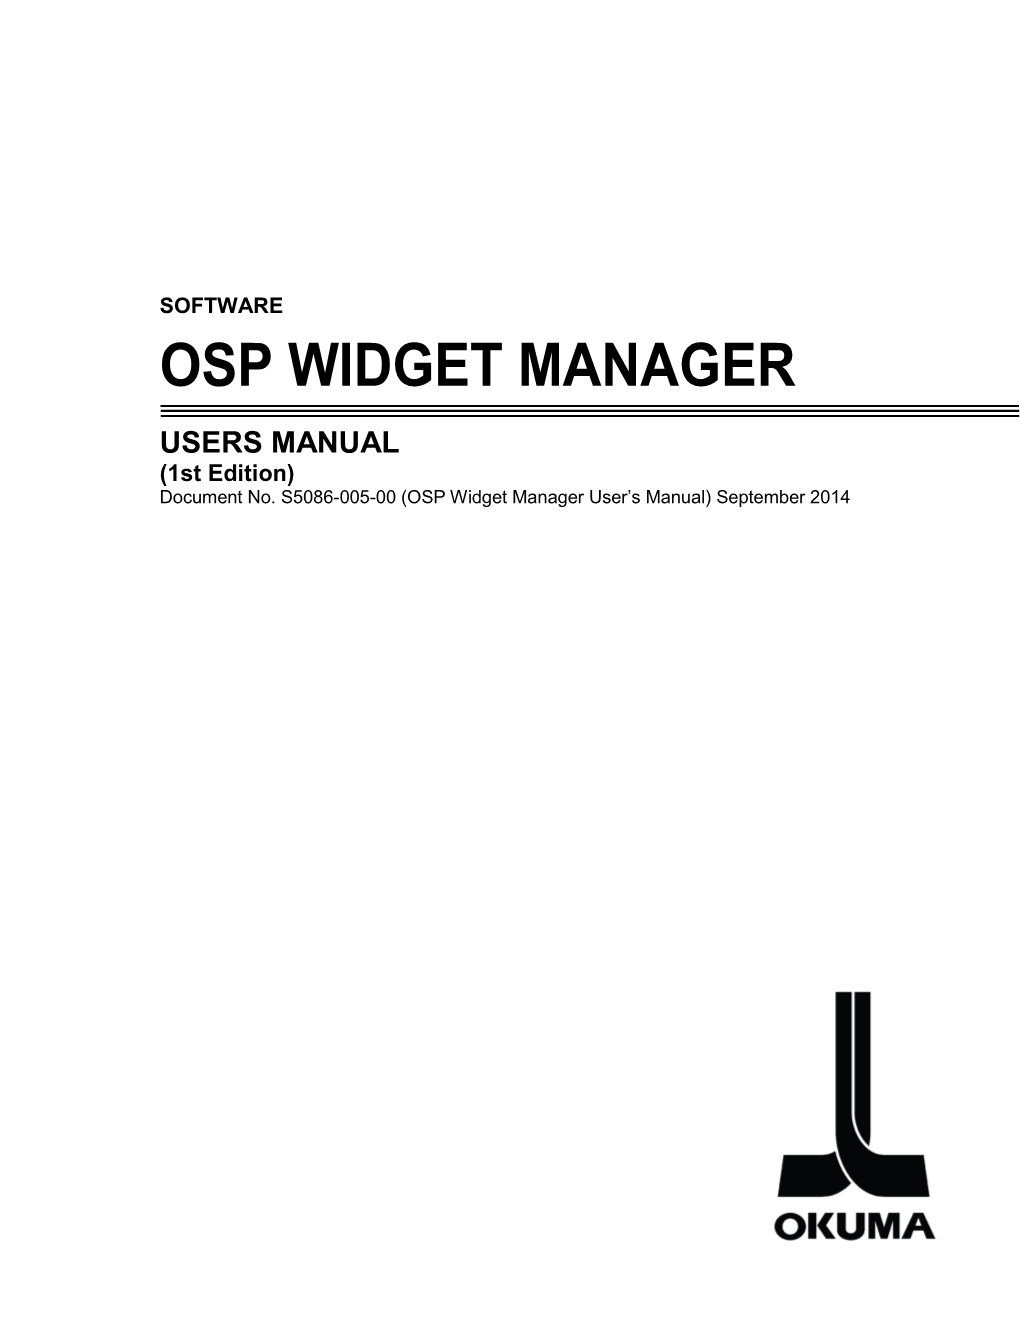 Pdf OSP Widget Manager User's Manual